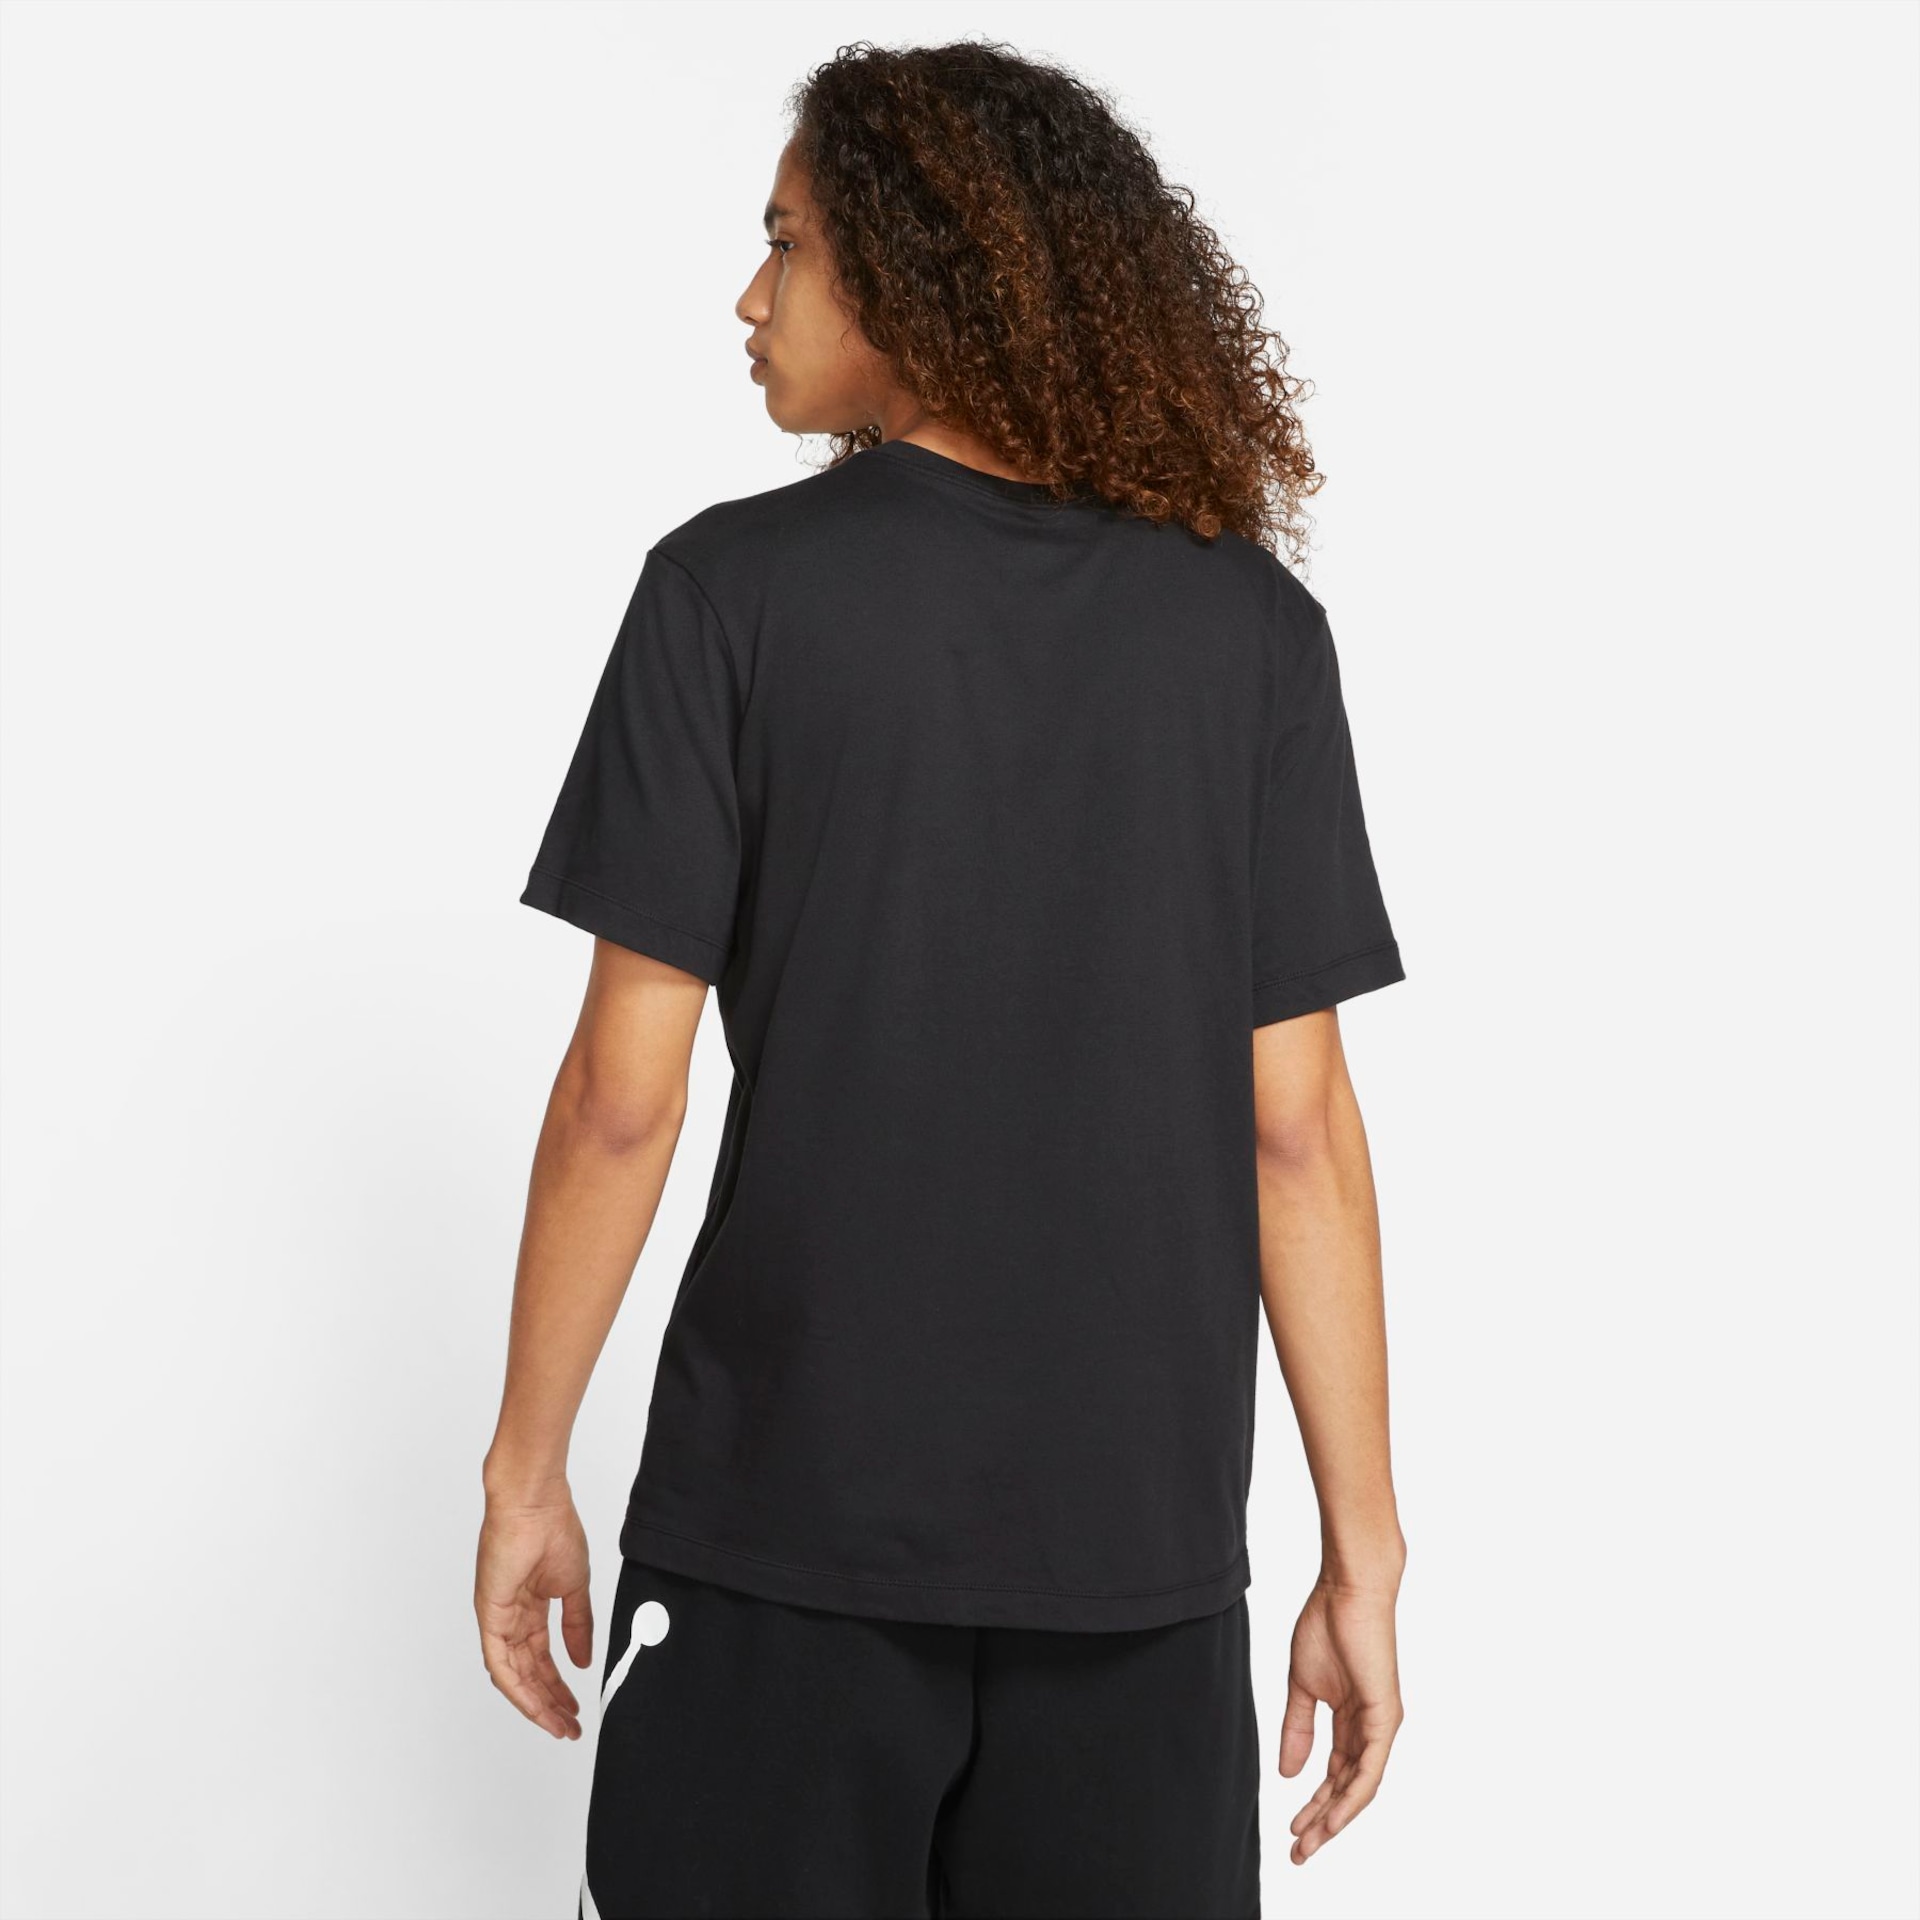 Camiseta Jordan Jumpman Masculina - Foto 2